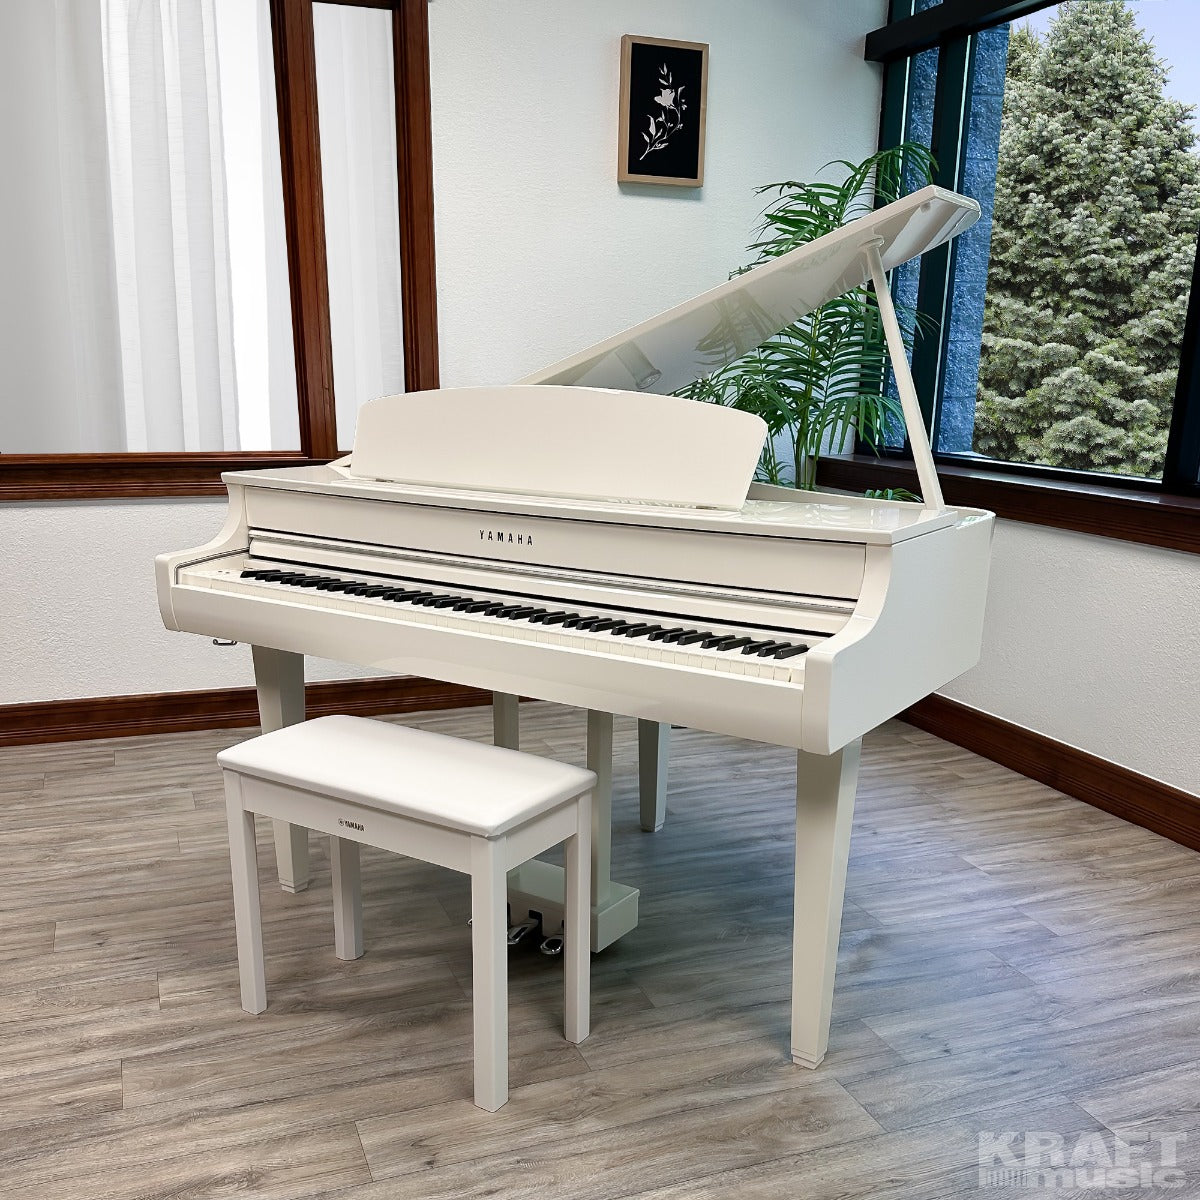 Yamaha Clavinova CLP-765GP Digital Piano - Polished White - Left angle